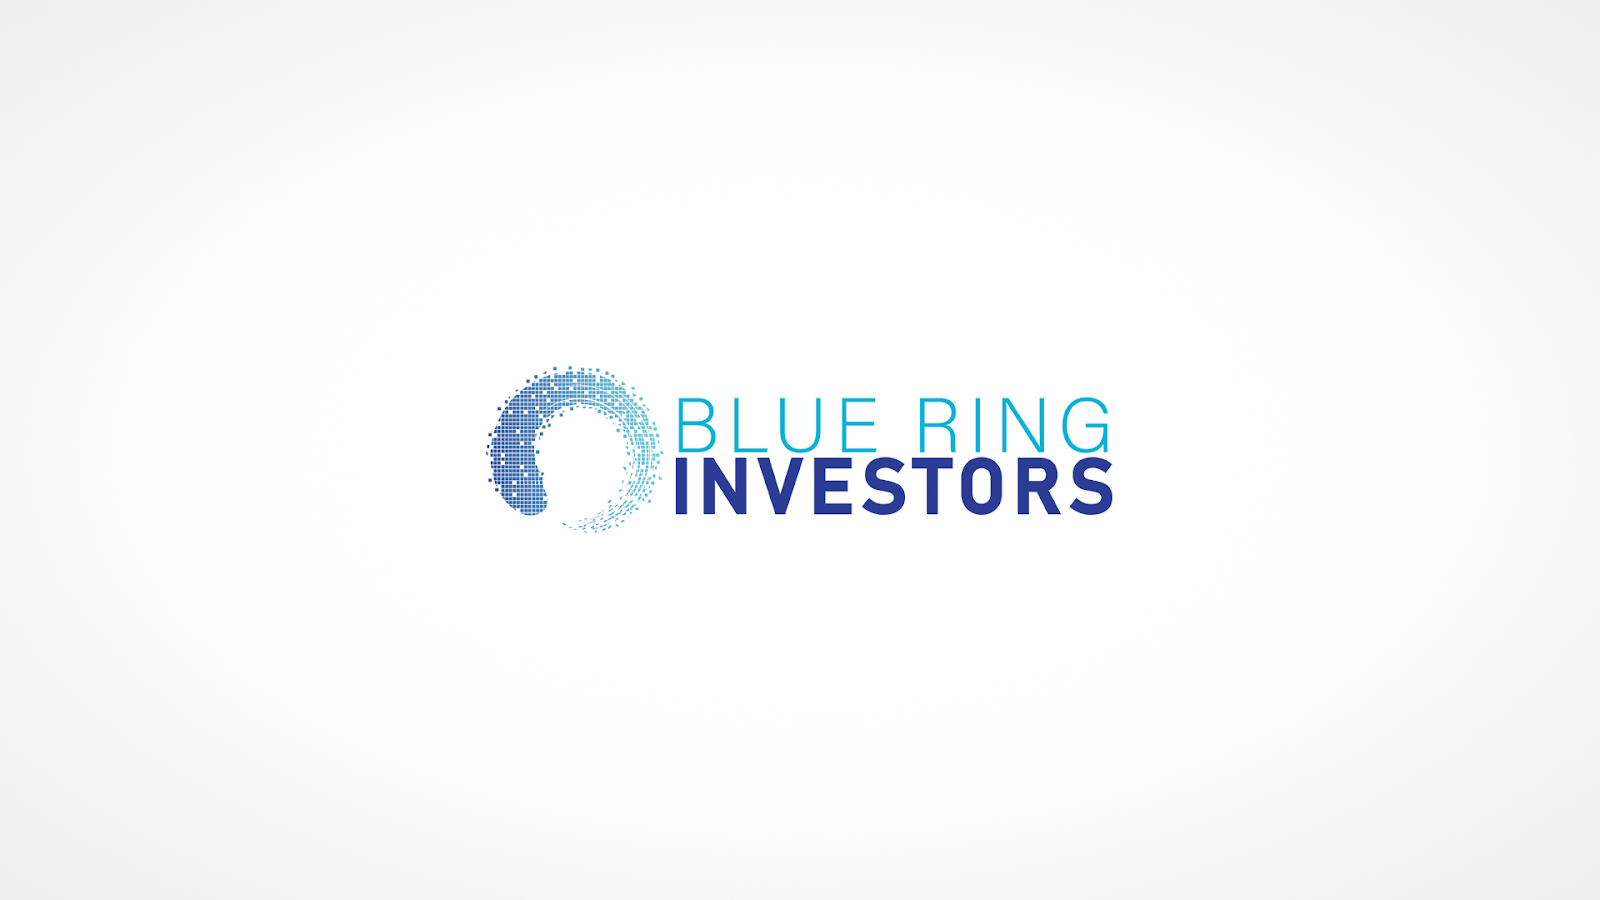 Blue Ring Investors, Thursday, June 16, 2022, Press release picture